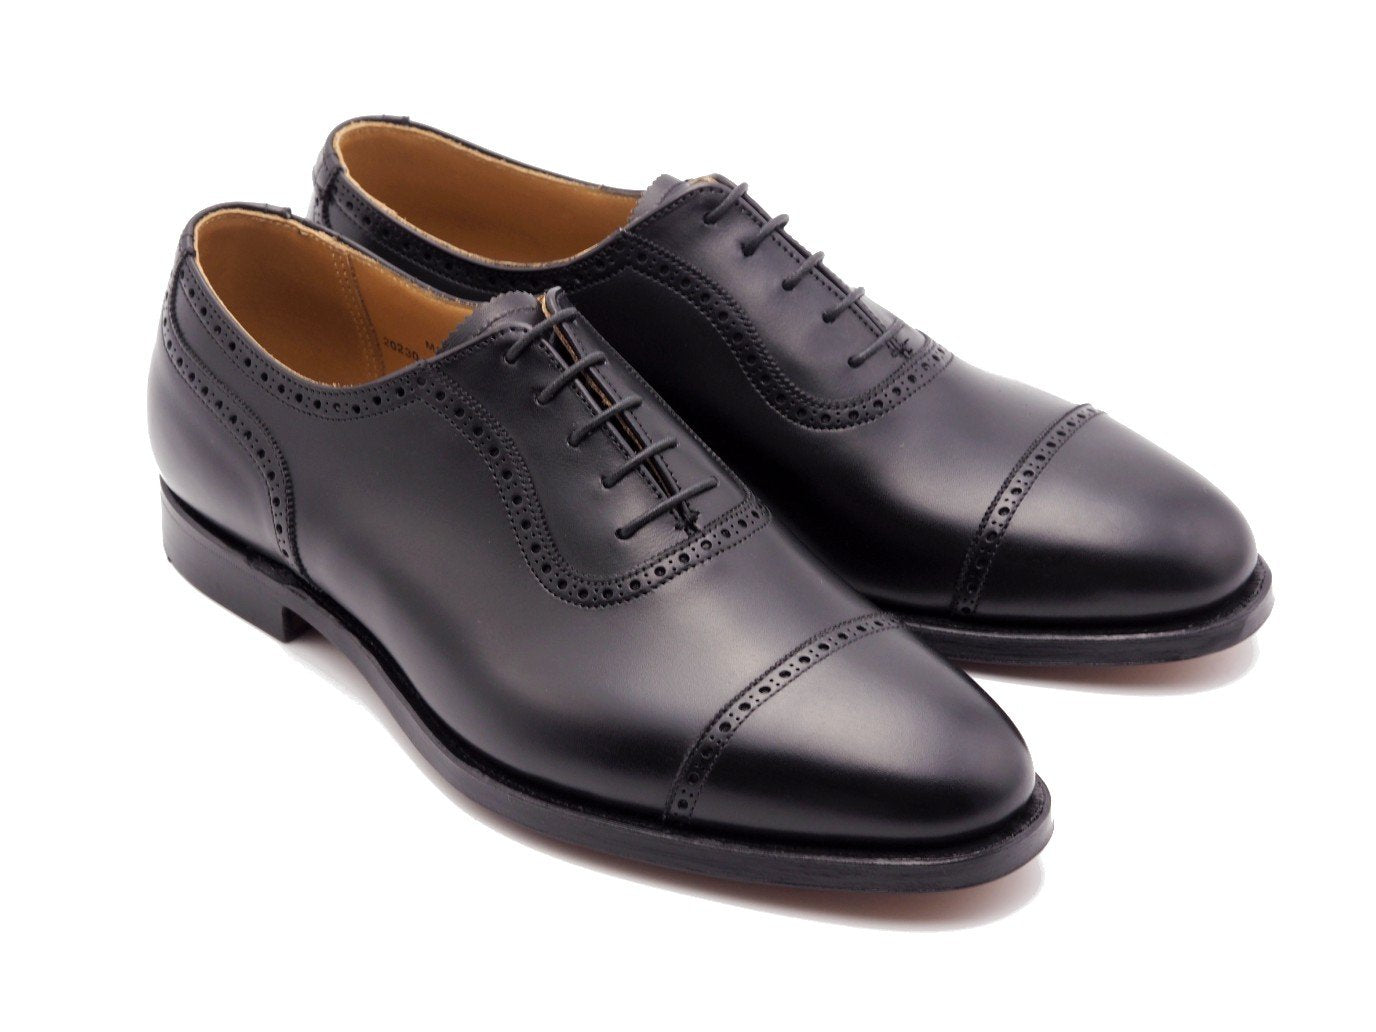 Crockett & Jones | Mens Shoes, Handmade in England – Double Monk